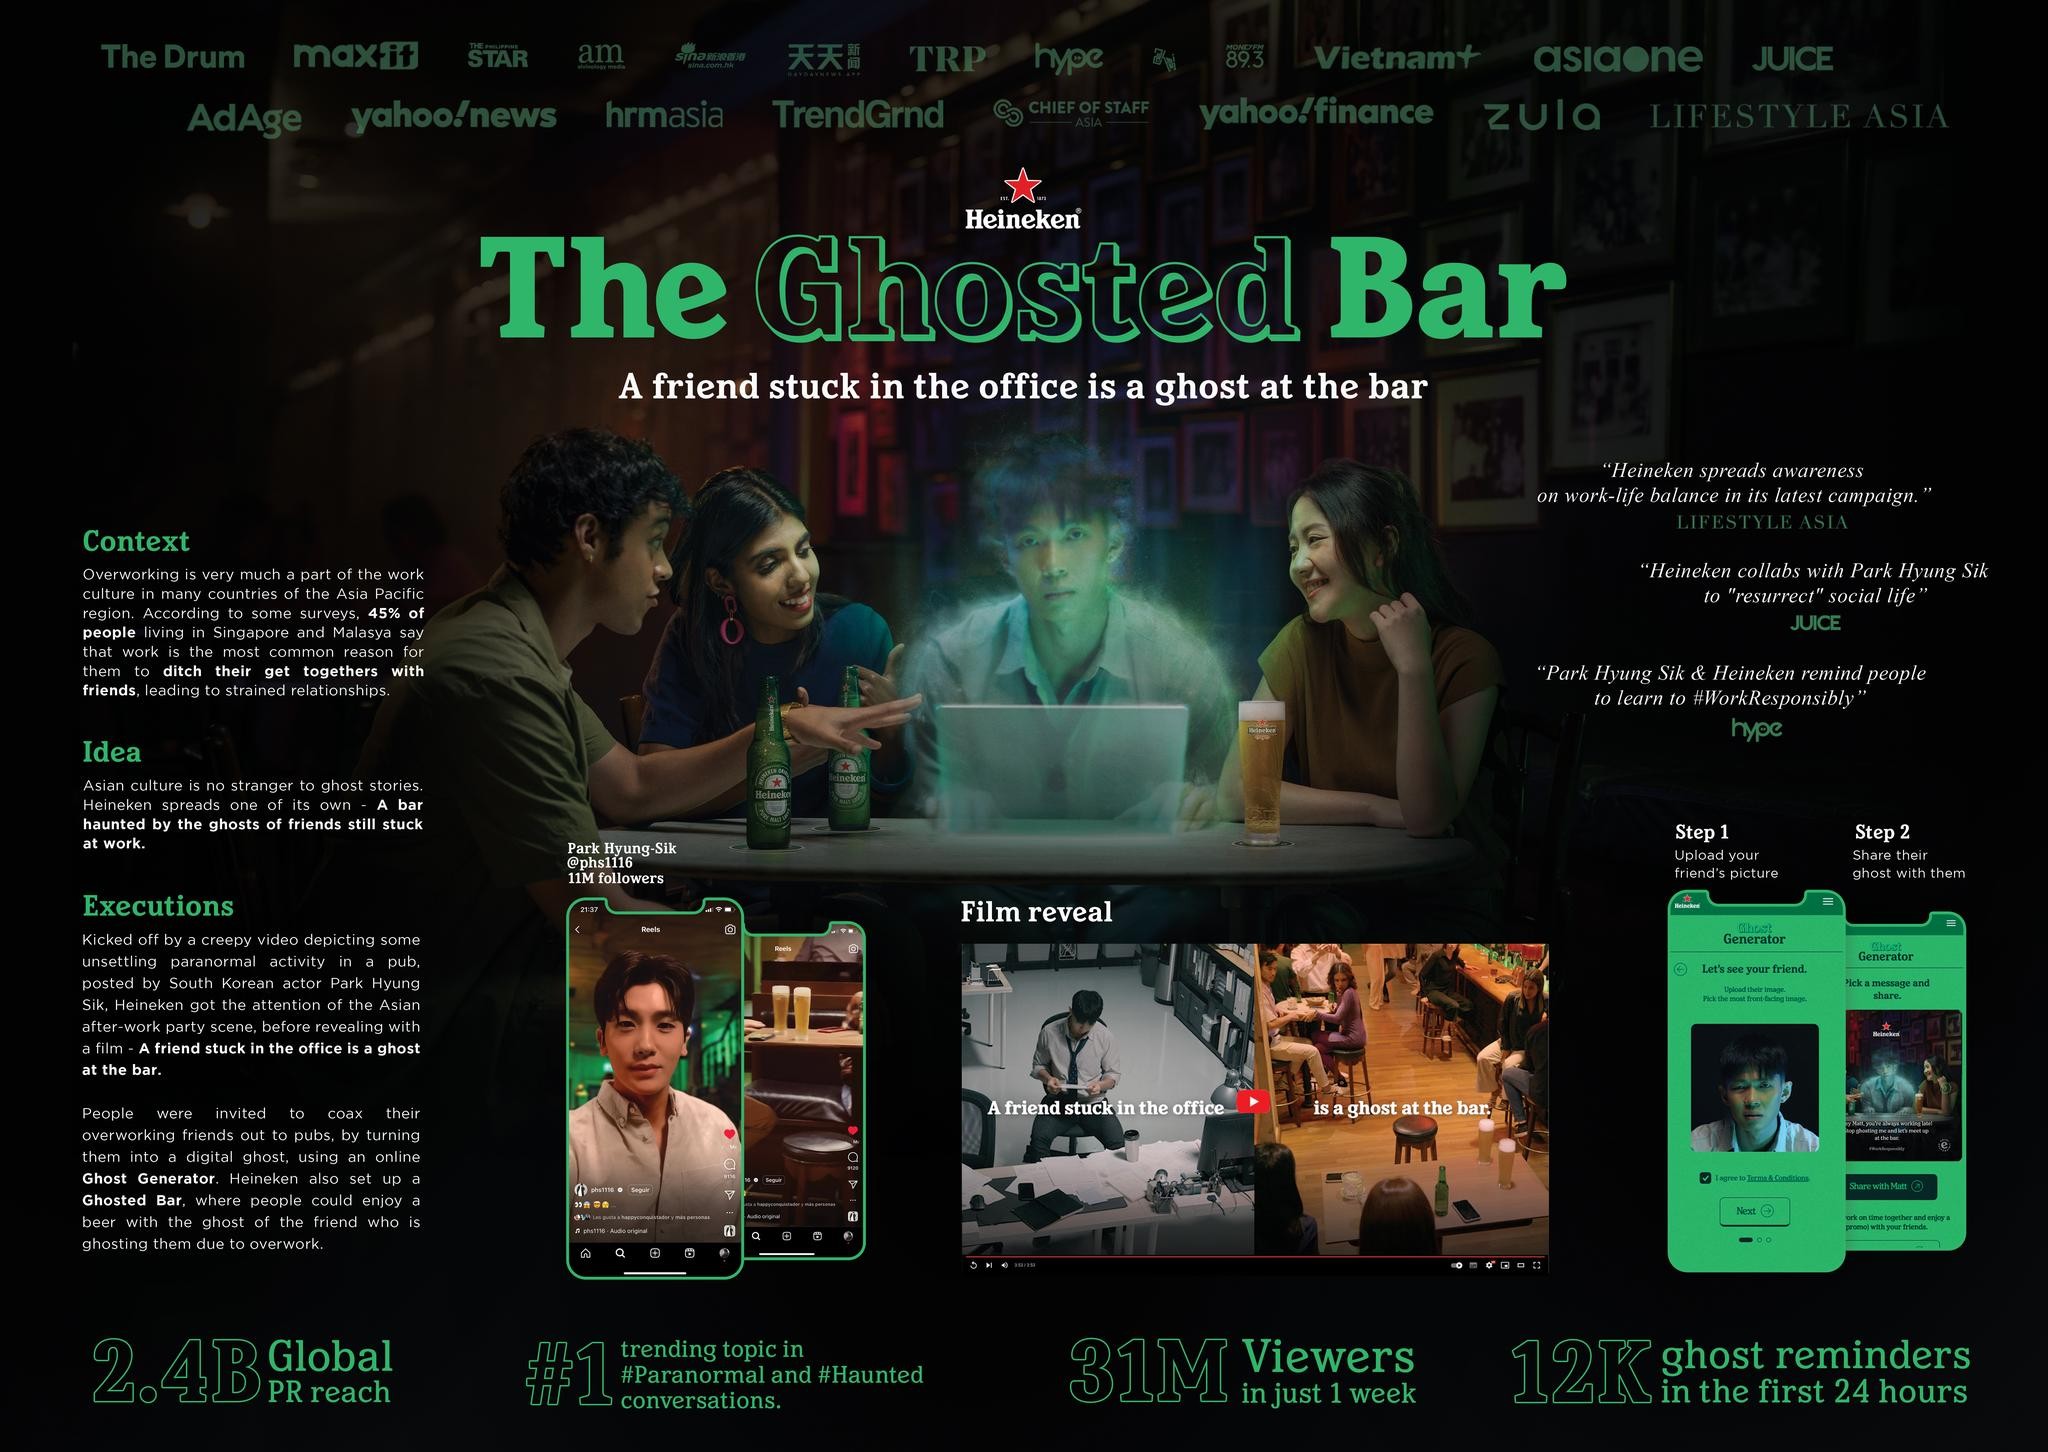 Heineken: The Ghosted Bar